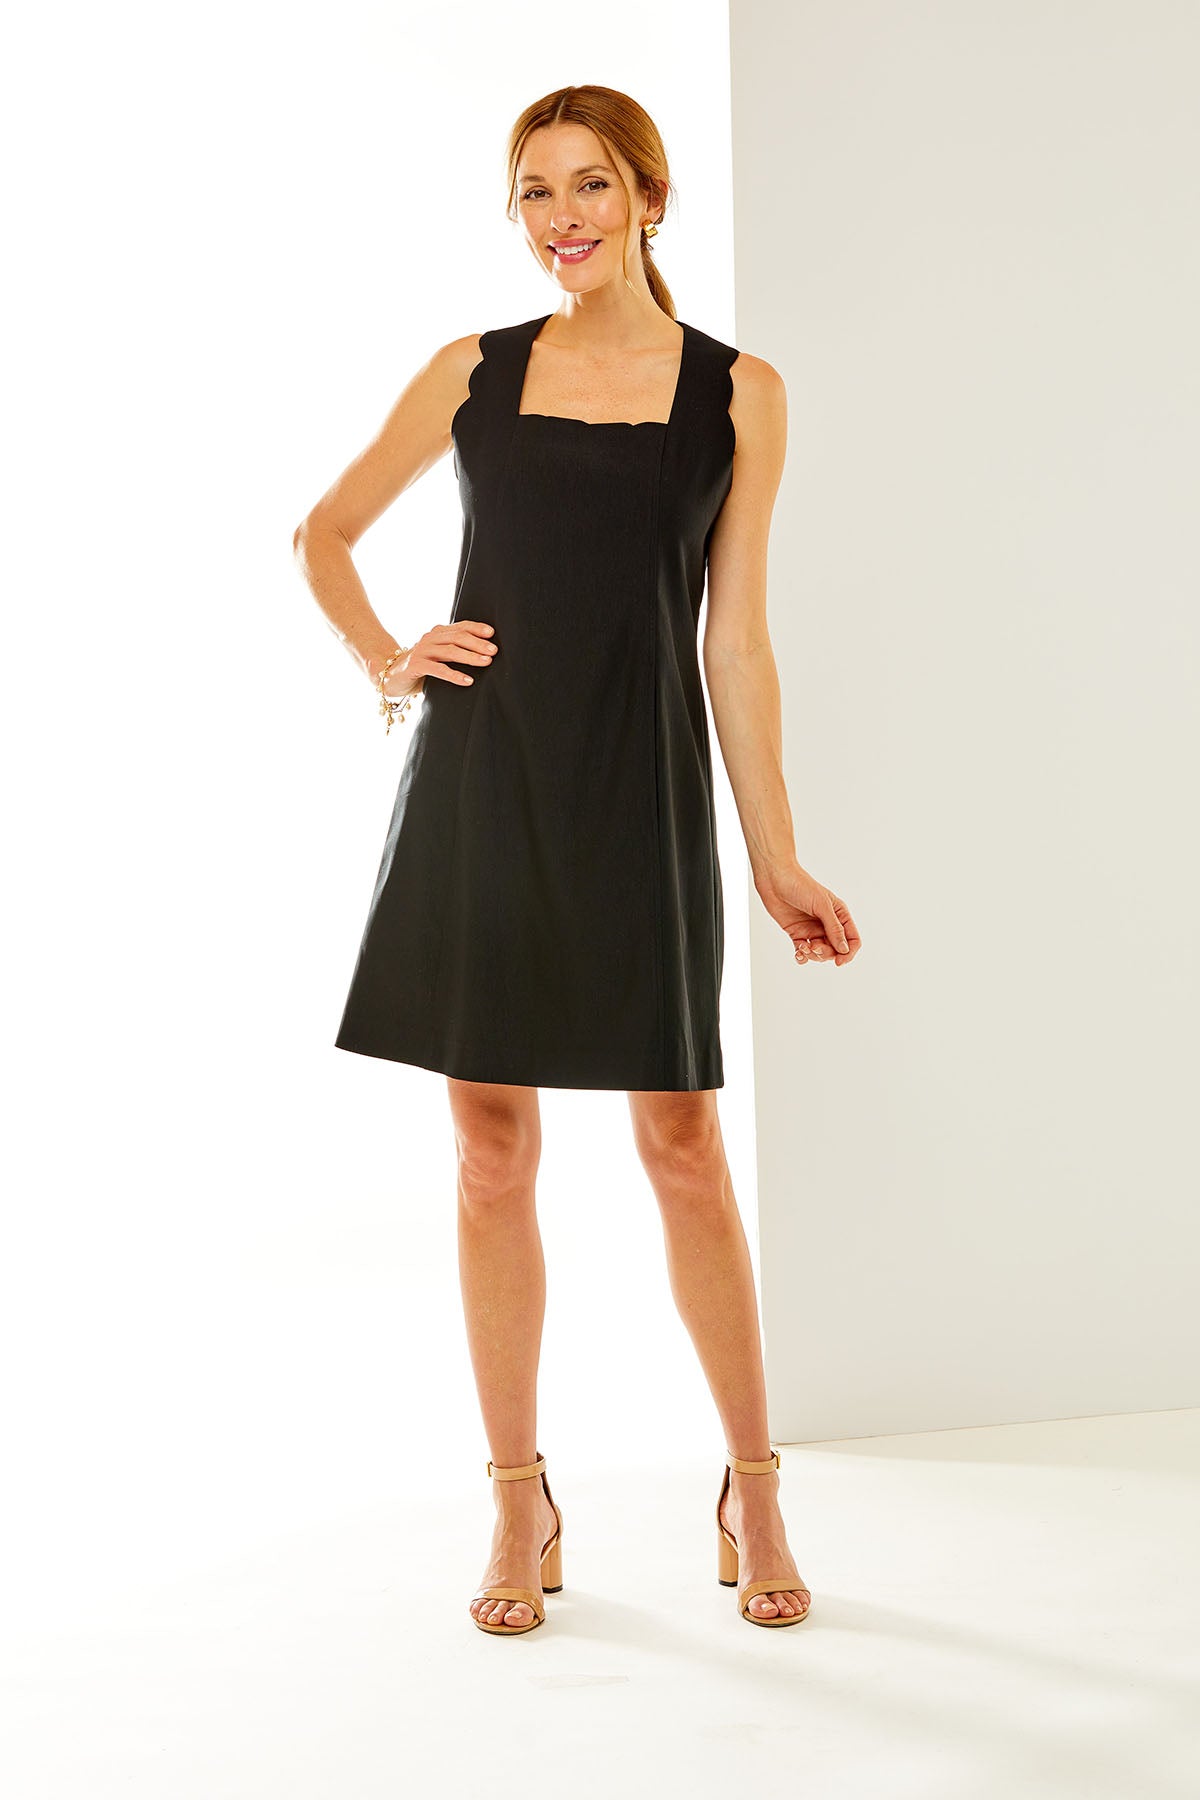 Woman in sleeveless black dress